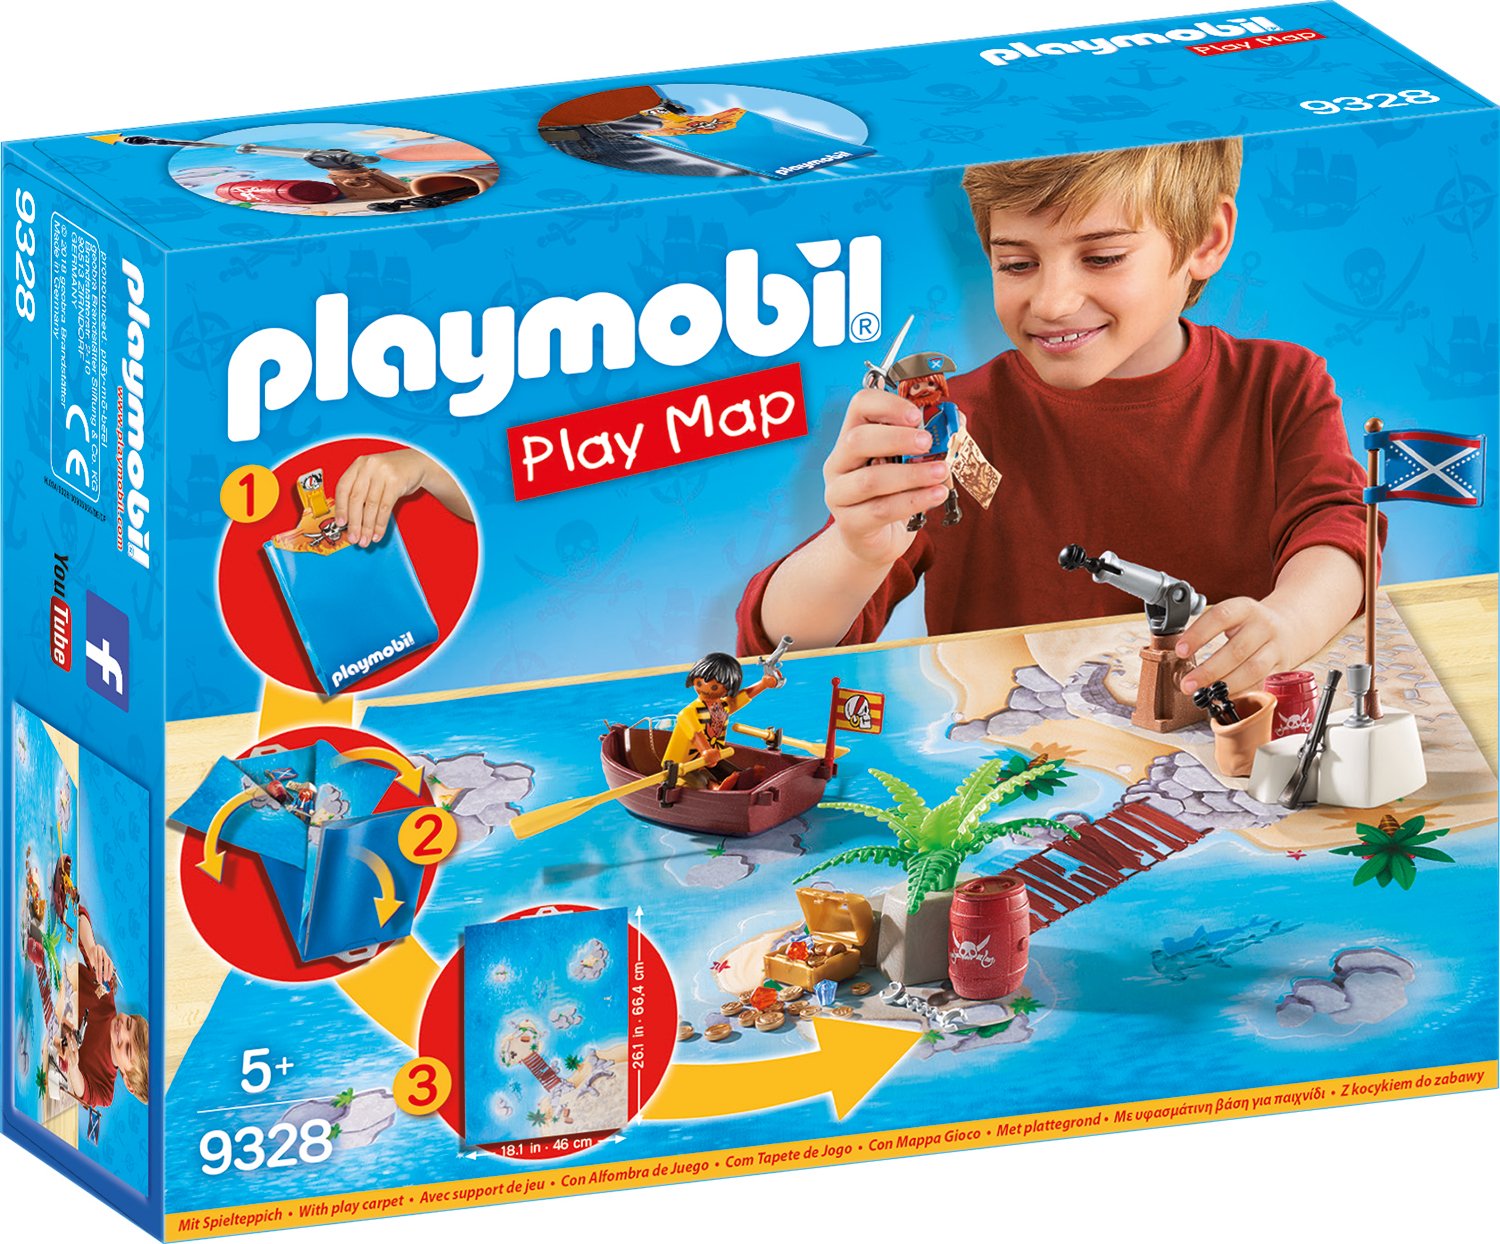 Playmobil Play Pirate Map Game